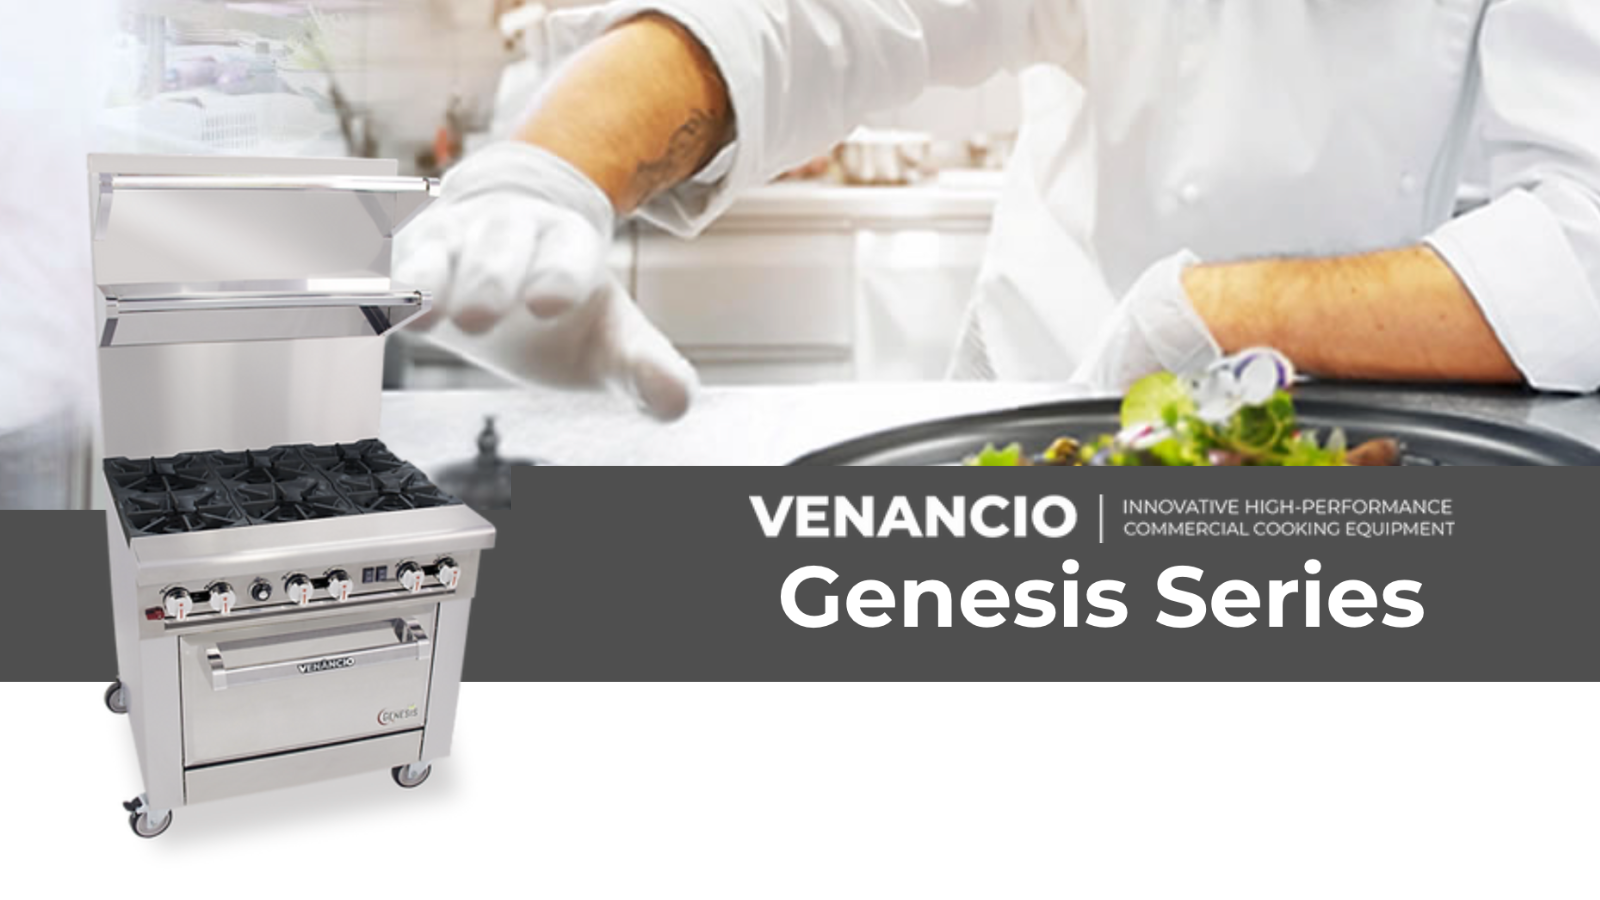 Venancio genesis series